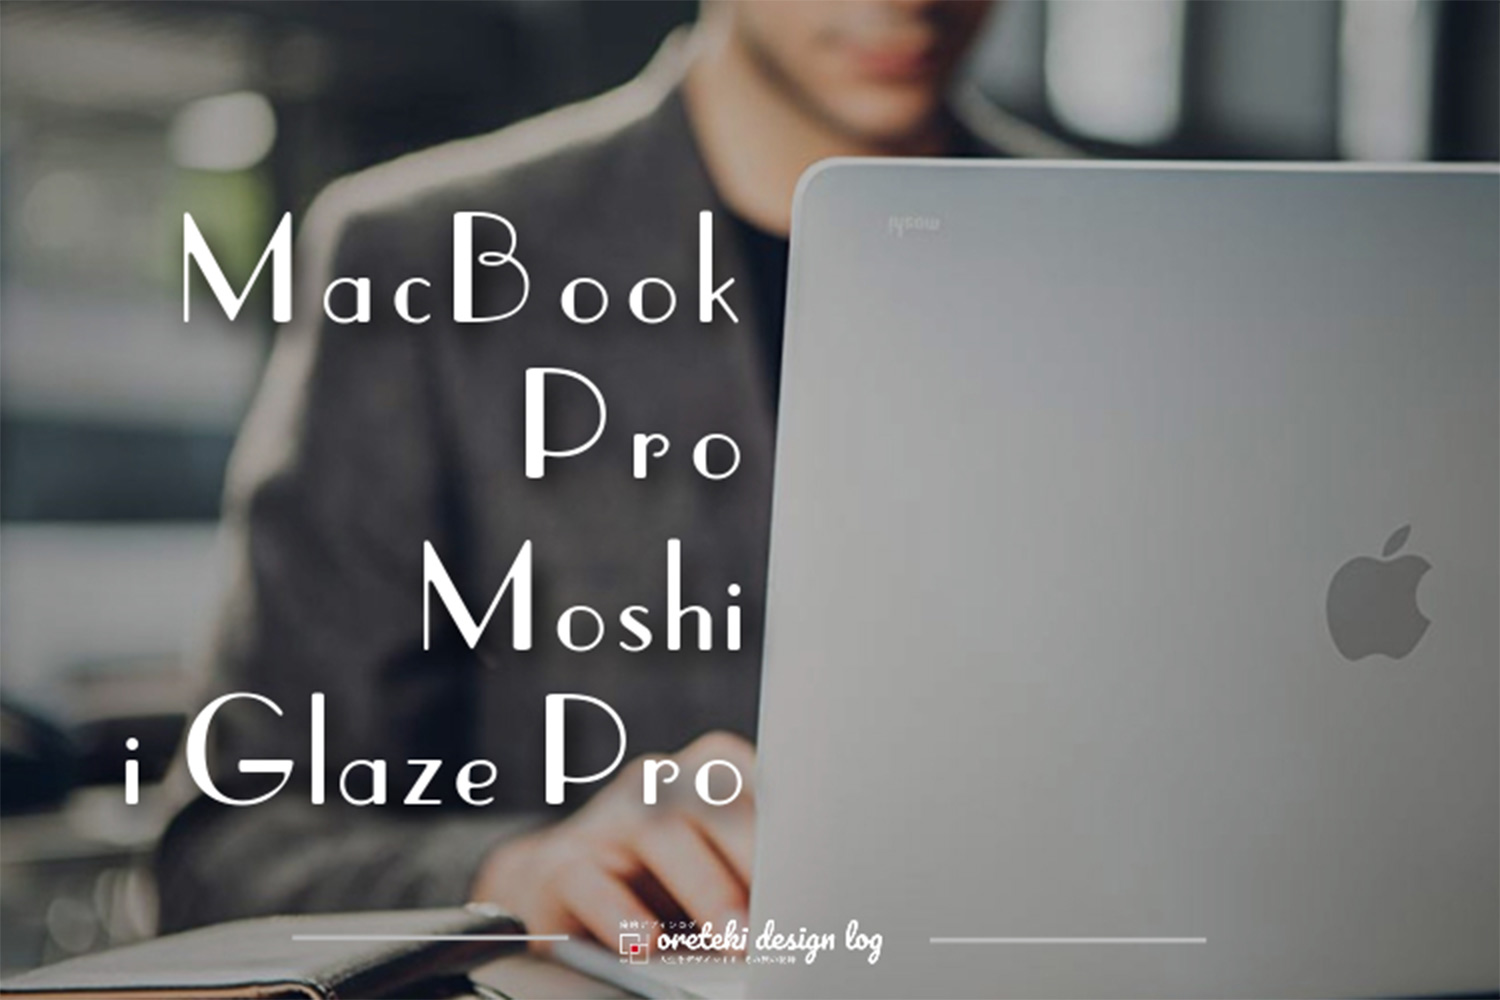 MacBook Pro moshi I glaze pro